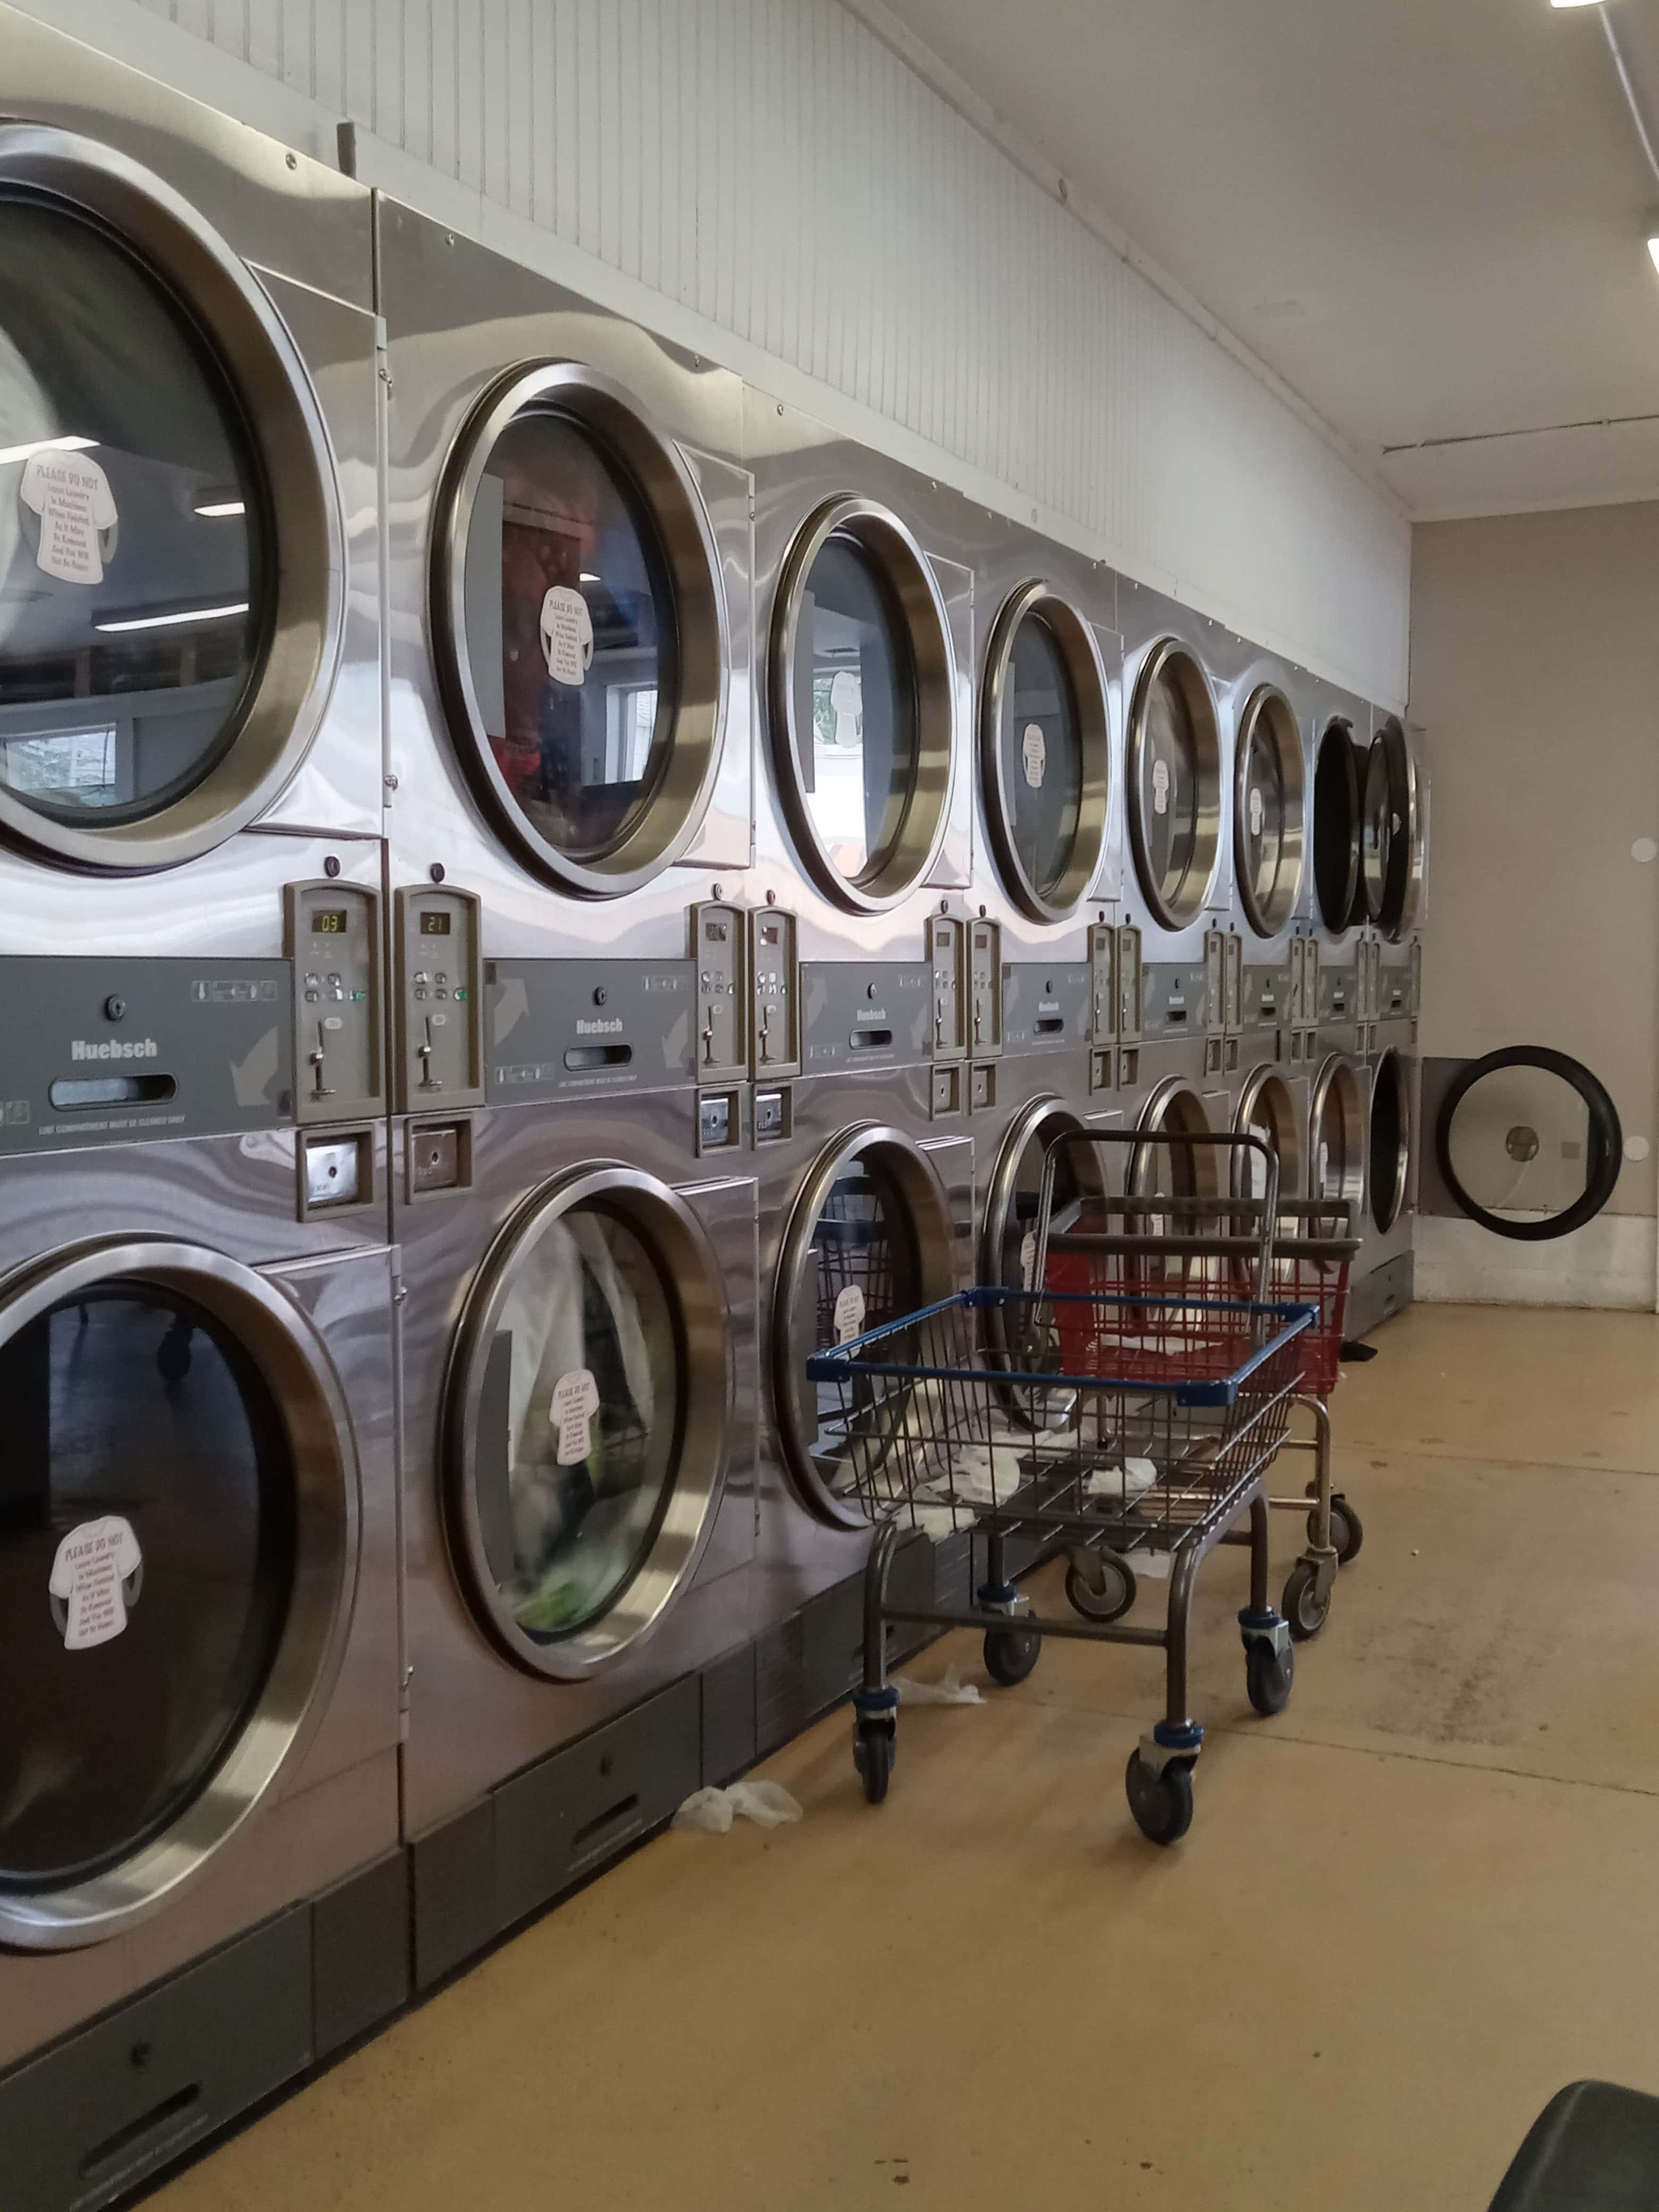 The Mat - Laundry - Hudson, NY, US, 24 hr laundromat